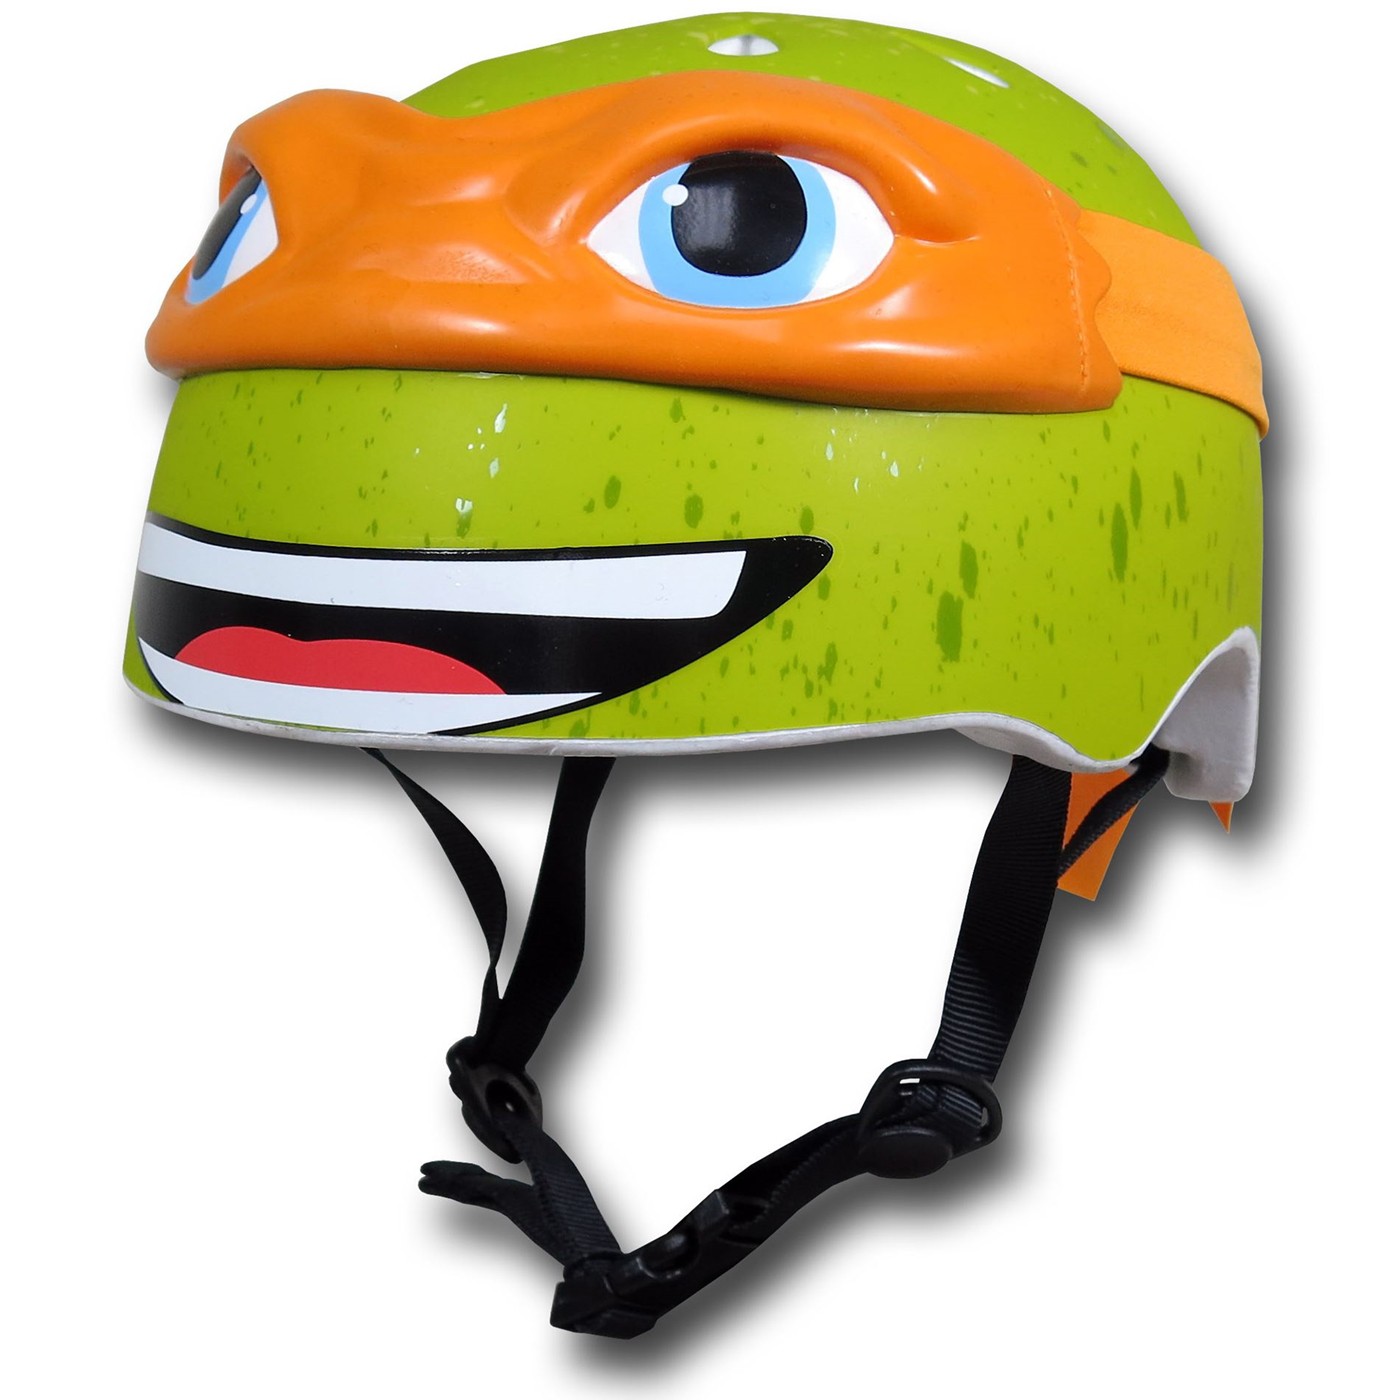 TMNT Michelangelo Kids Bike Helmet